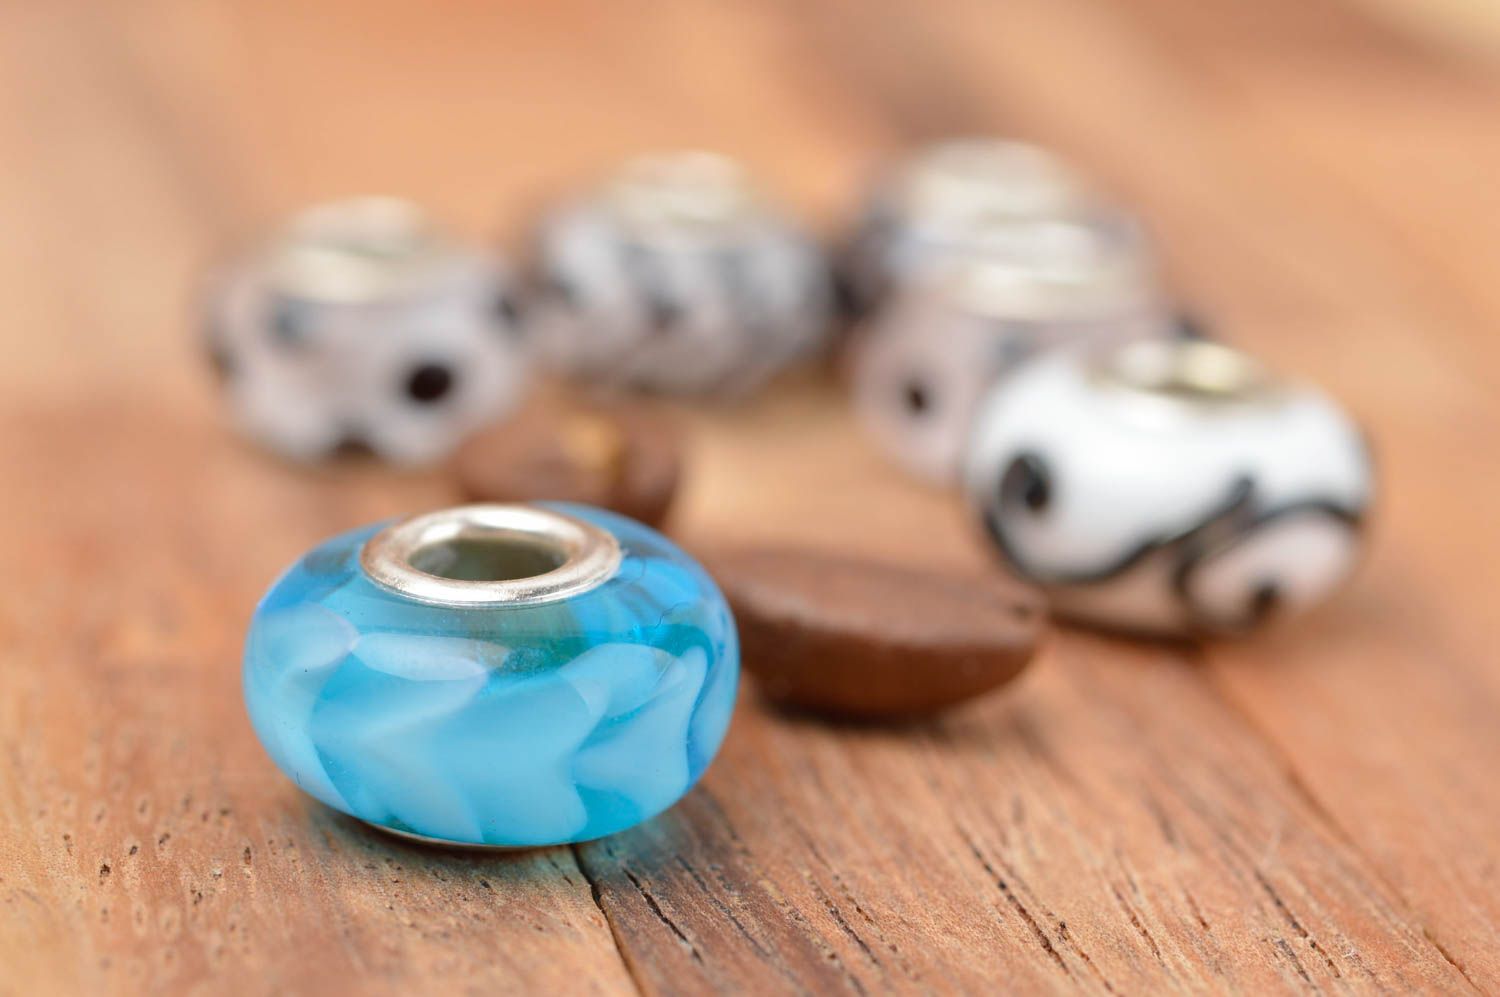 Handmade glass bead unusual jewelry findings jewelry making supplies small gifts photo 1